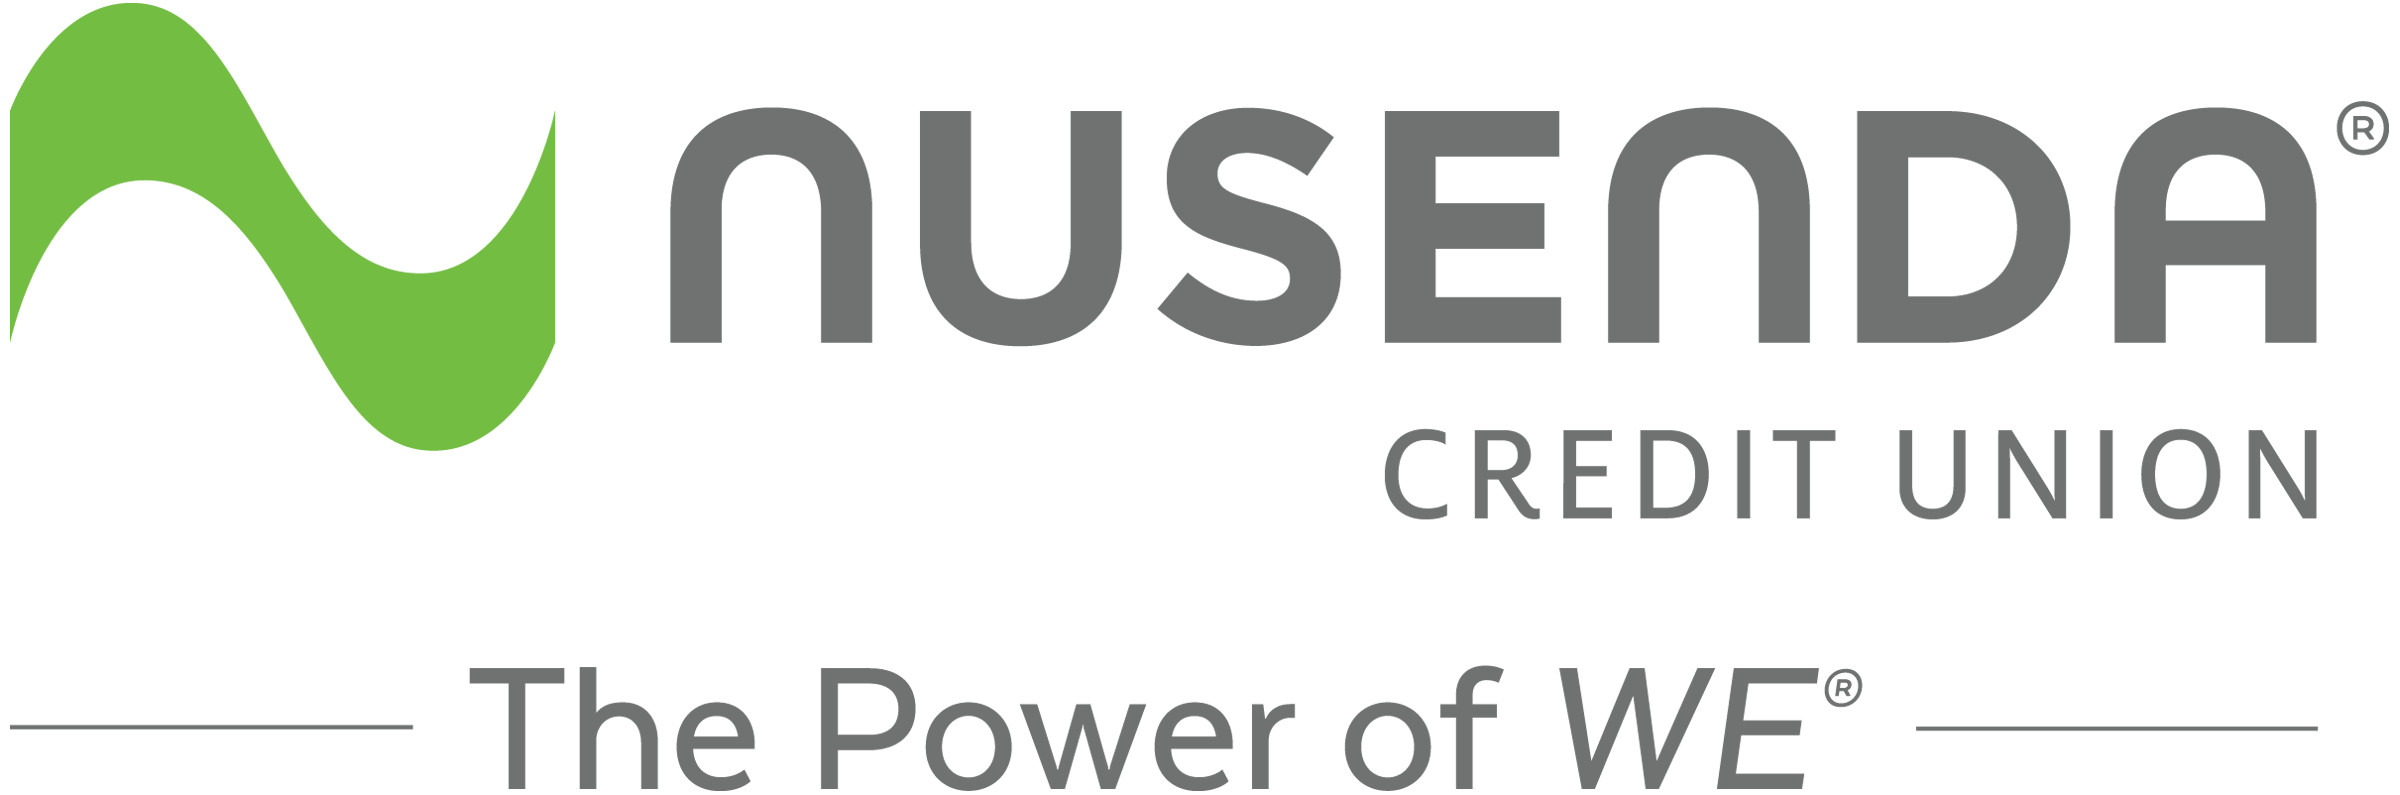 Nusenda Credit Union logo